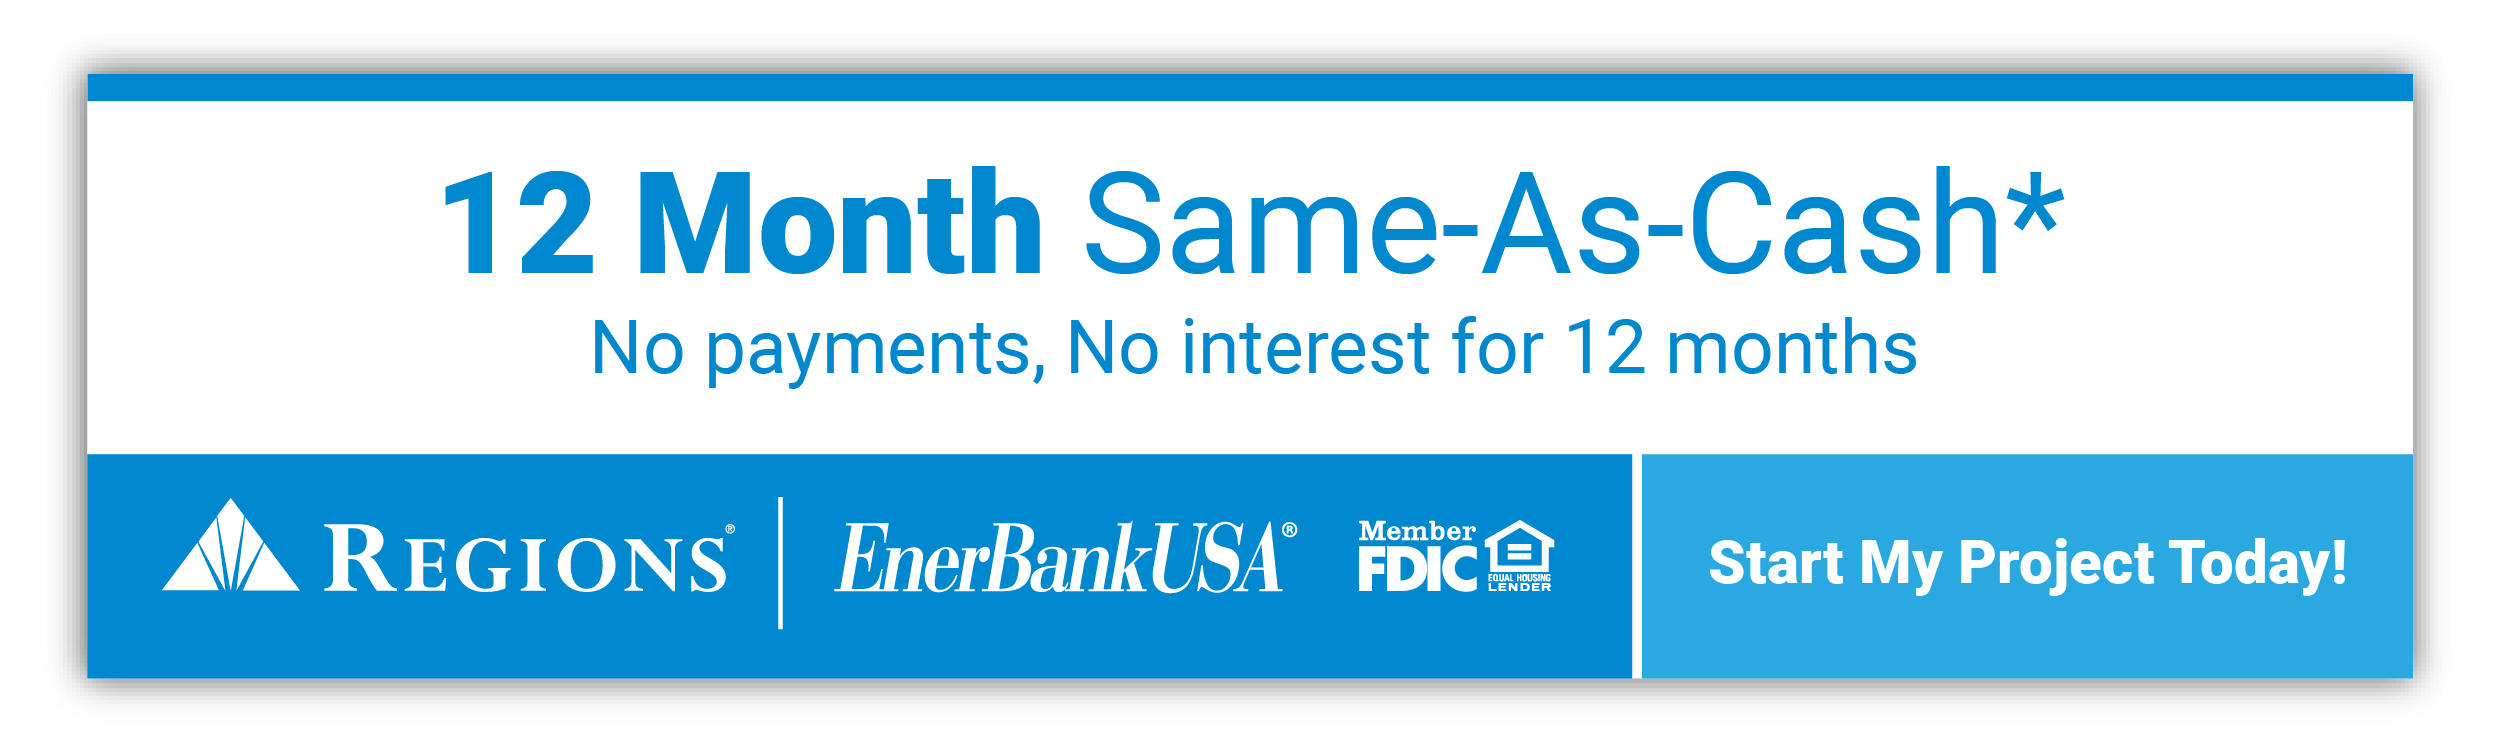 12 month same as cash loan horizontal banner